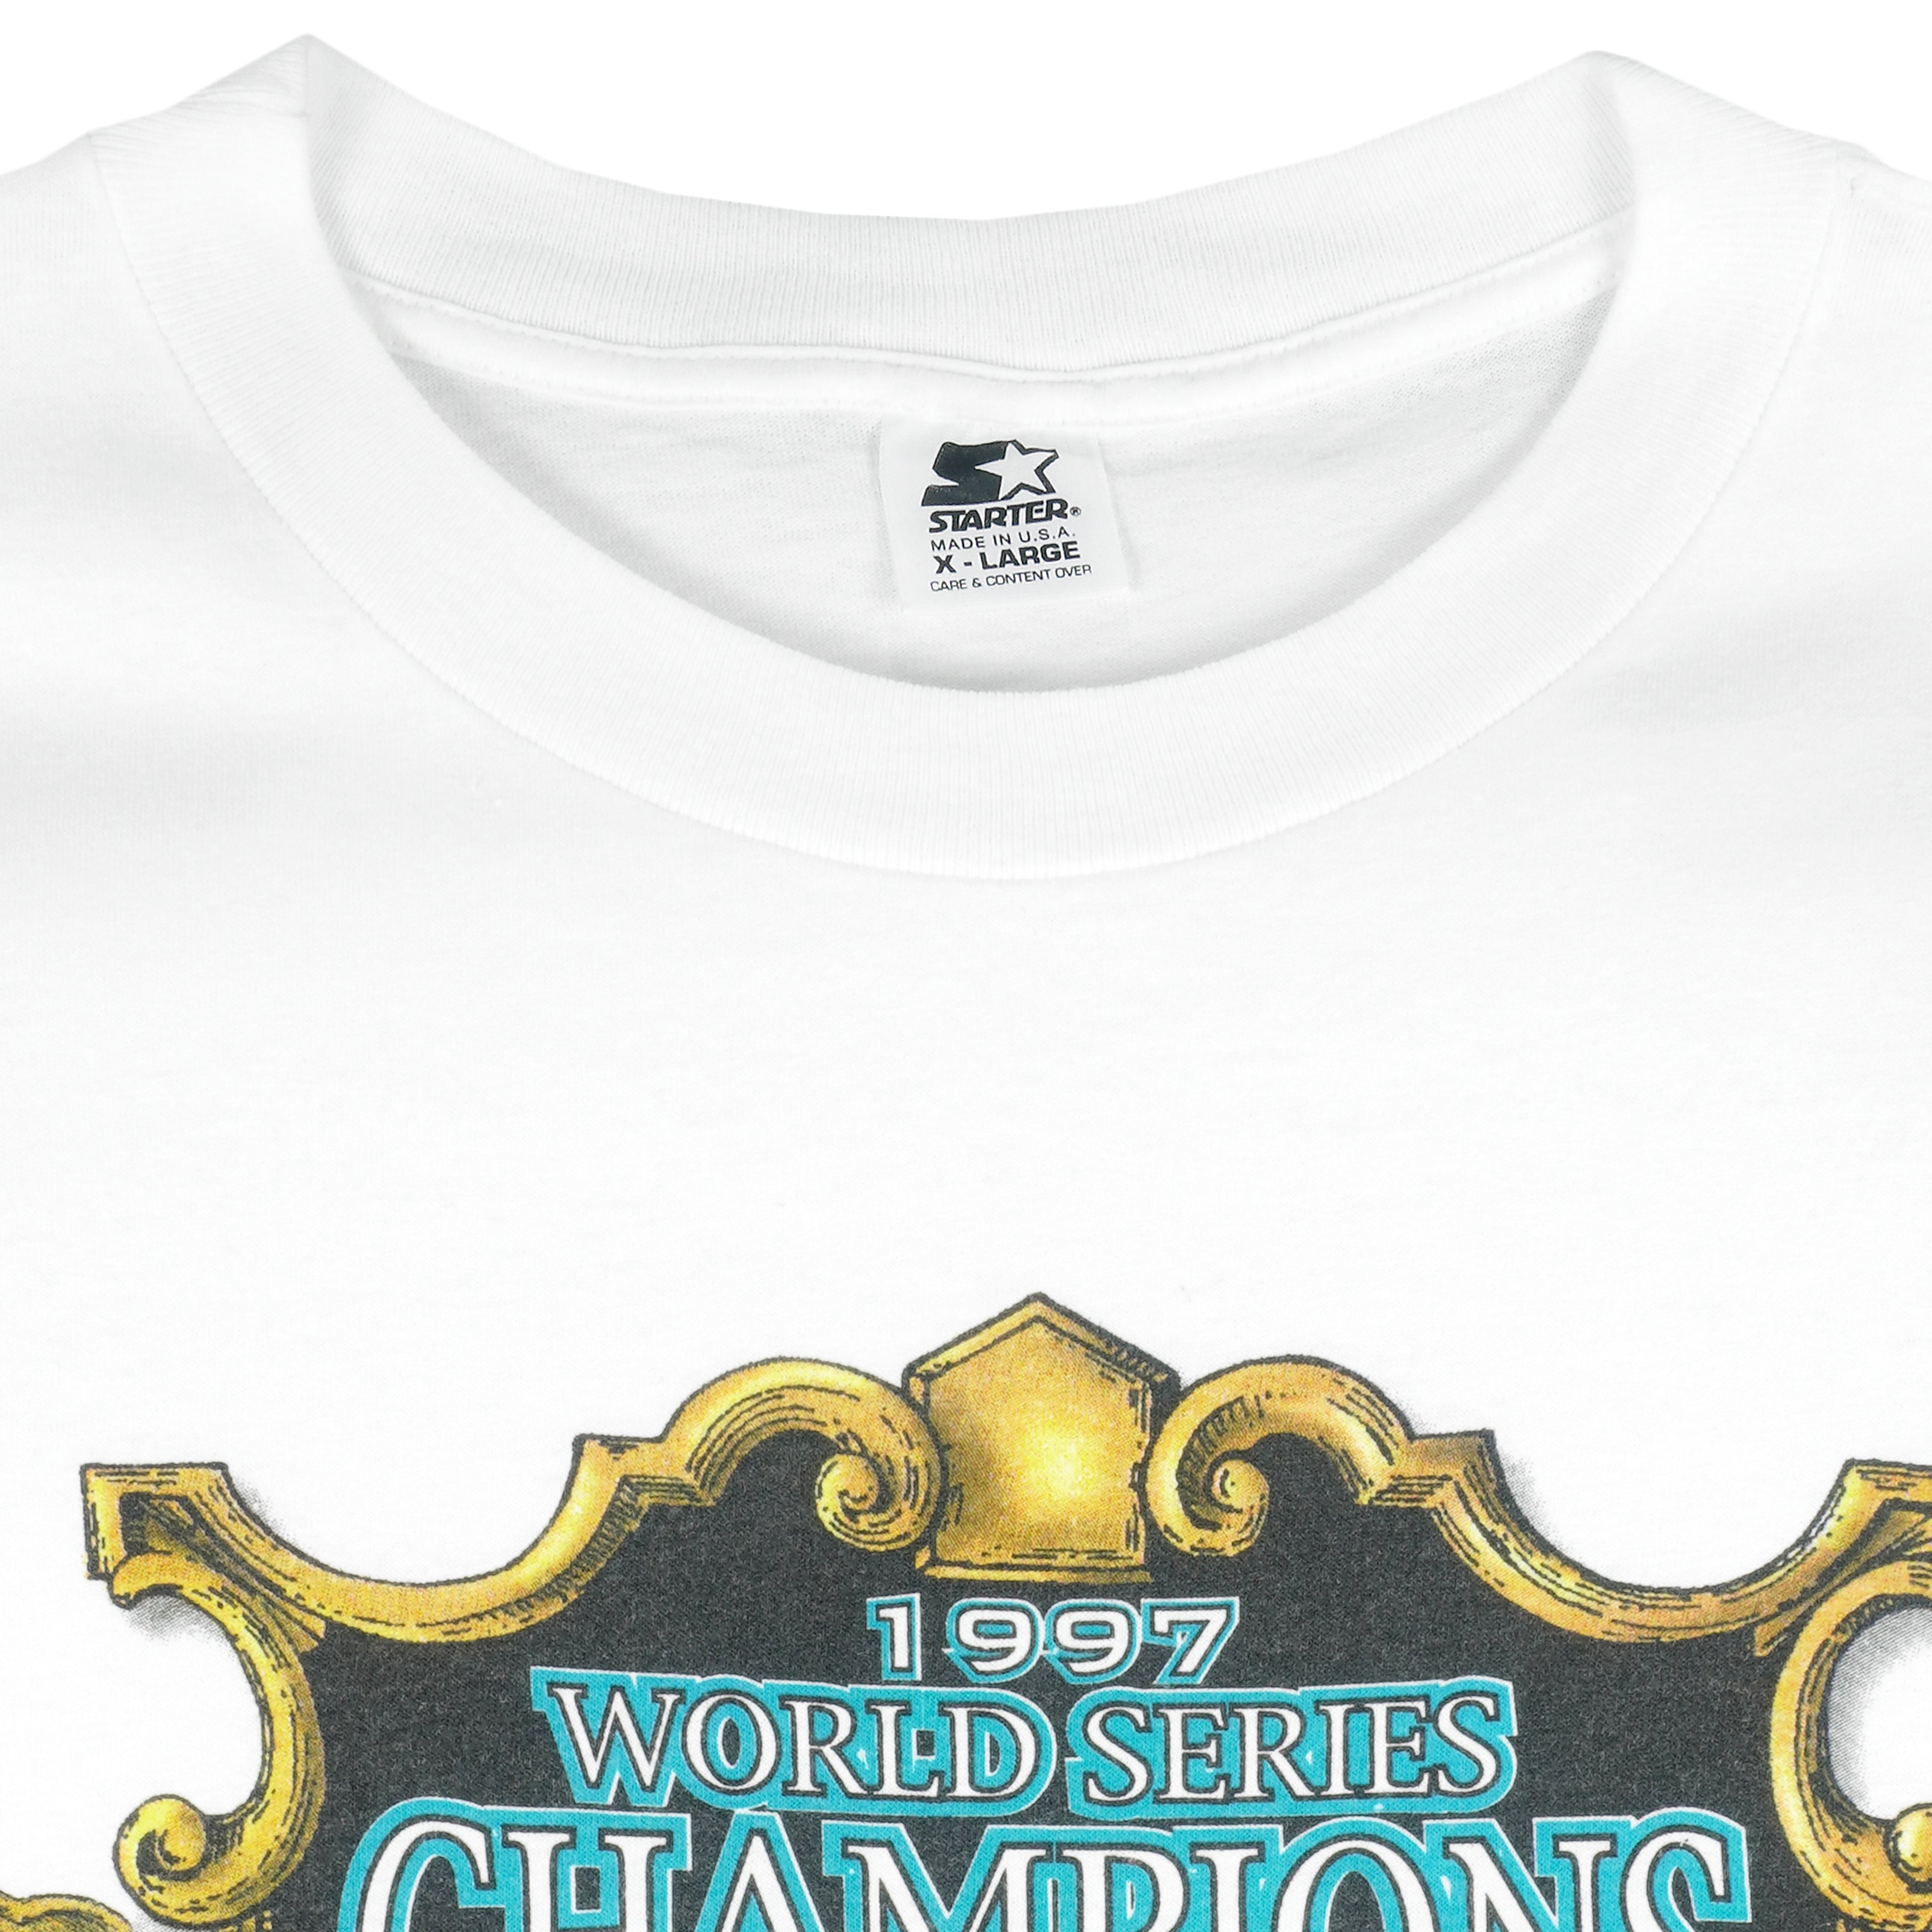 Vintage Florida Marlins 1997 World Series Champs T Shirt Tee